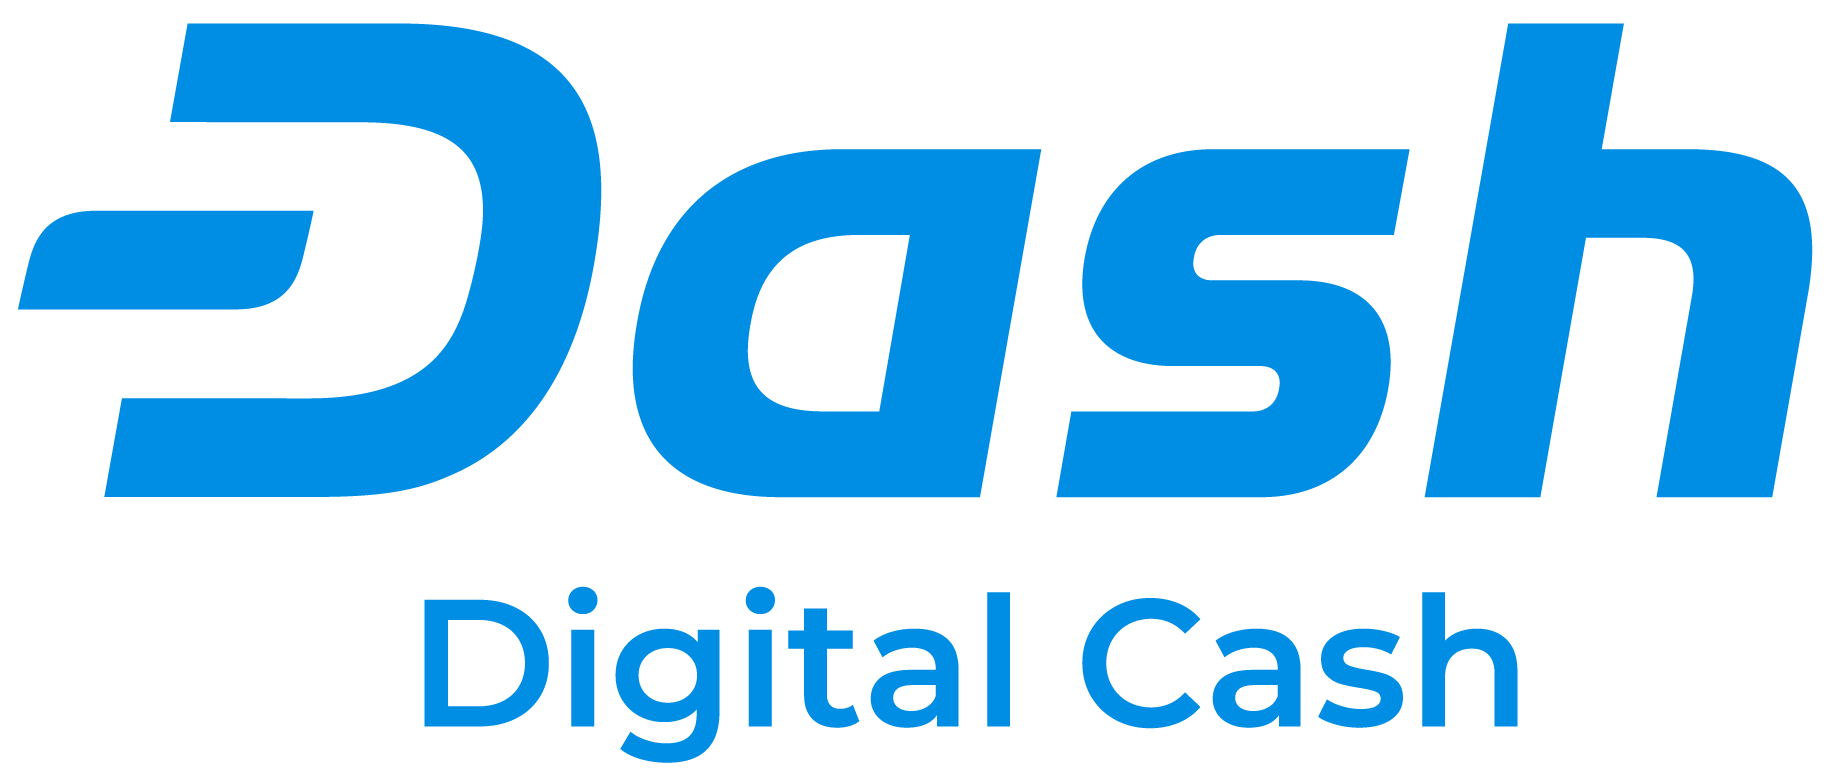 Blue Dash Logo - Dash Official Website. Dash Crypto Currency